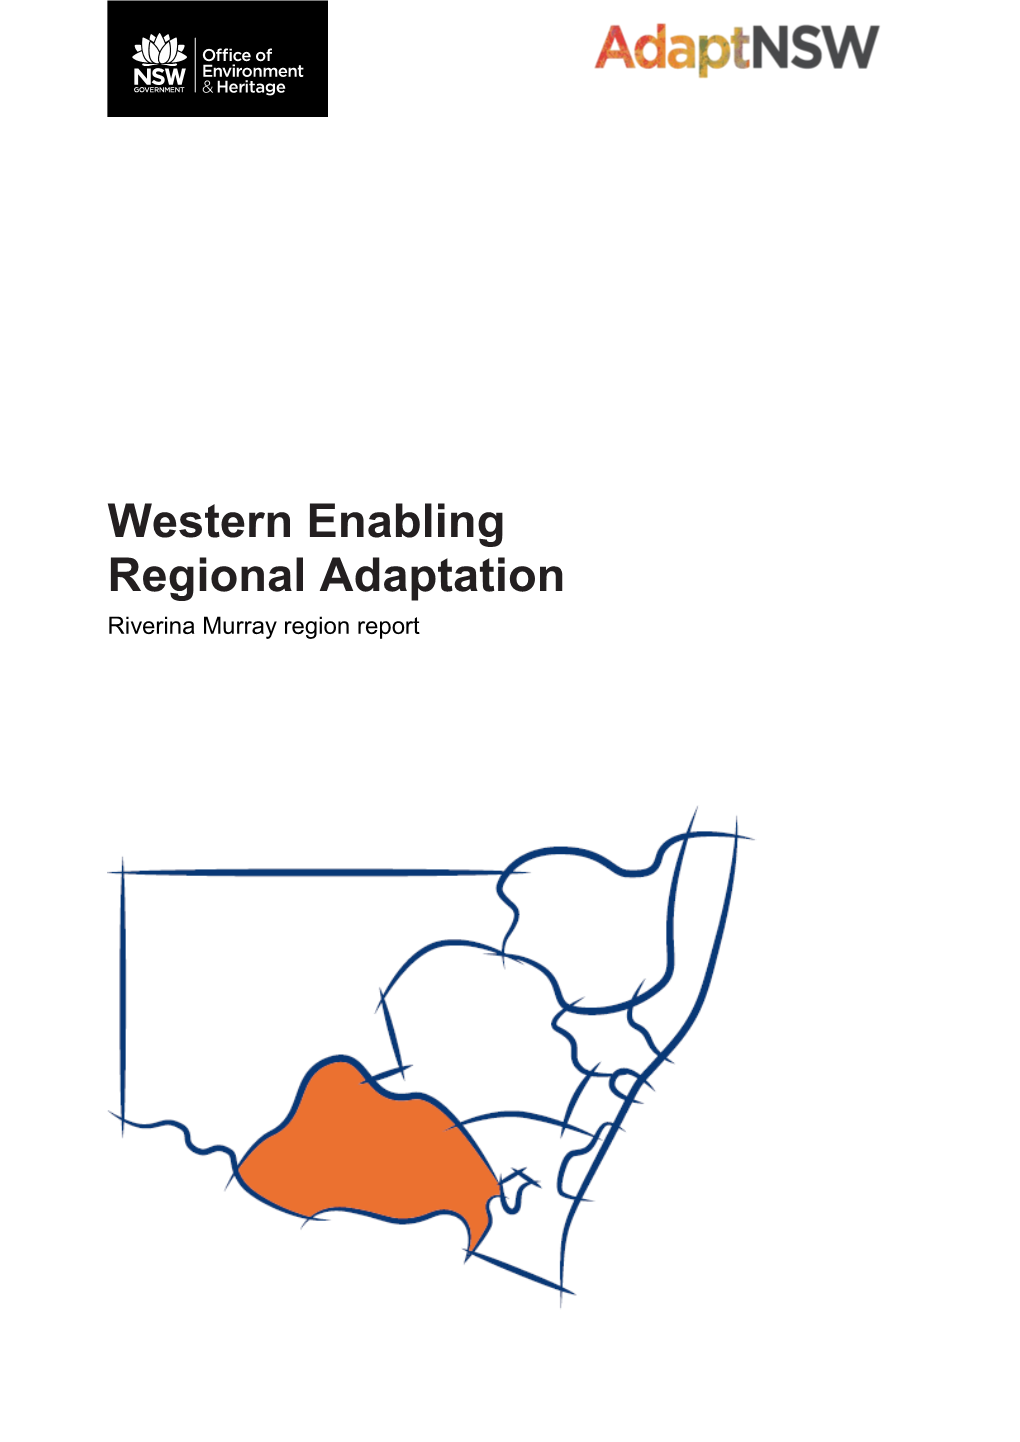 Western Enabling Regional Adaptation Riverina Murray Region Report